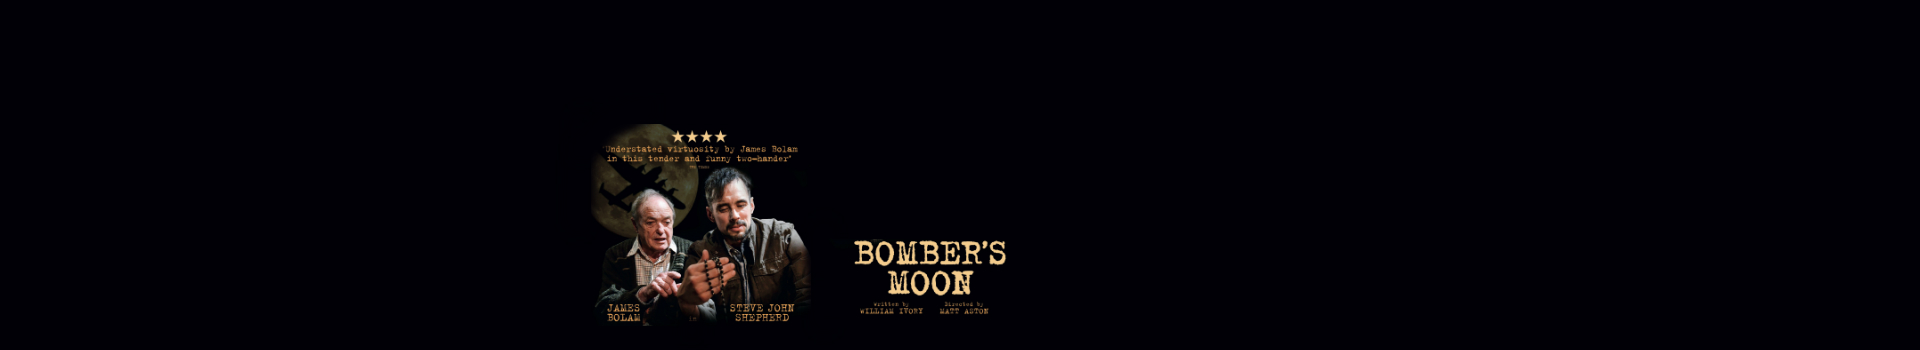 Bomber's Moon tickets London Trafalgar Studios 2